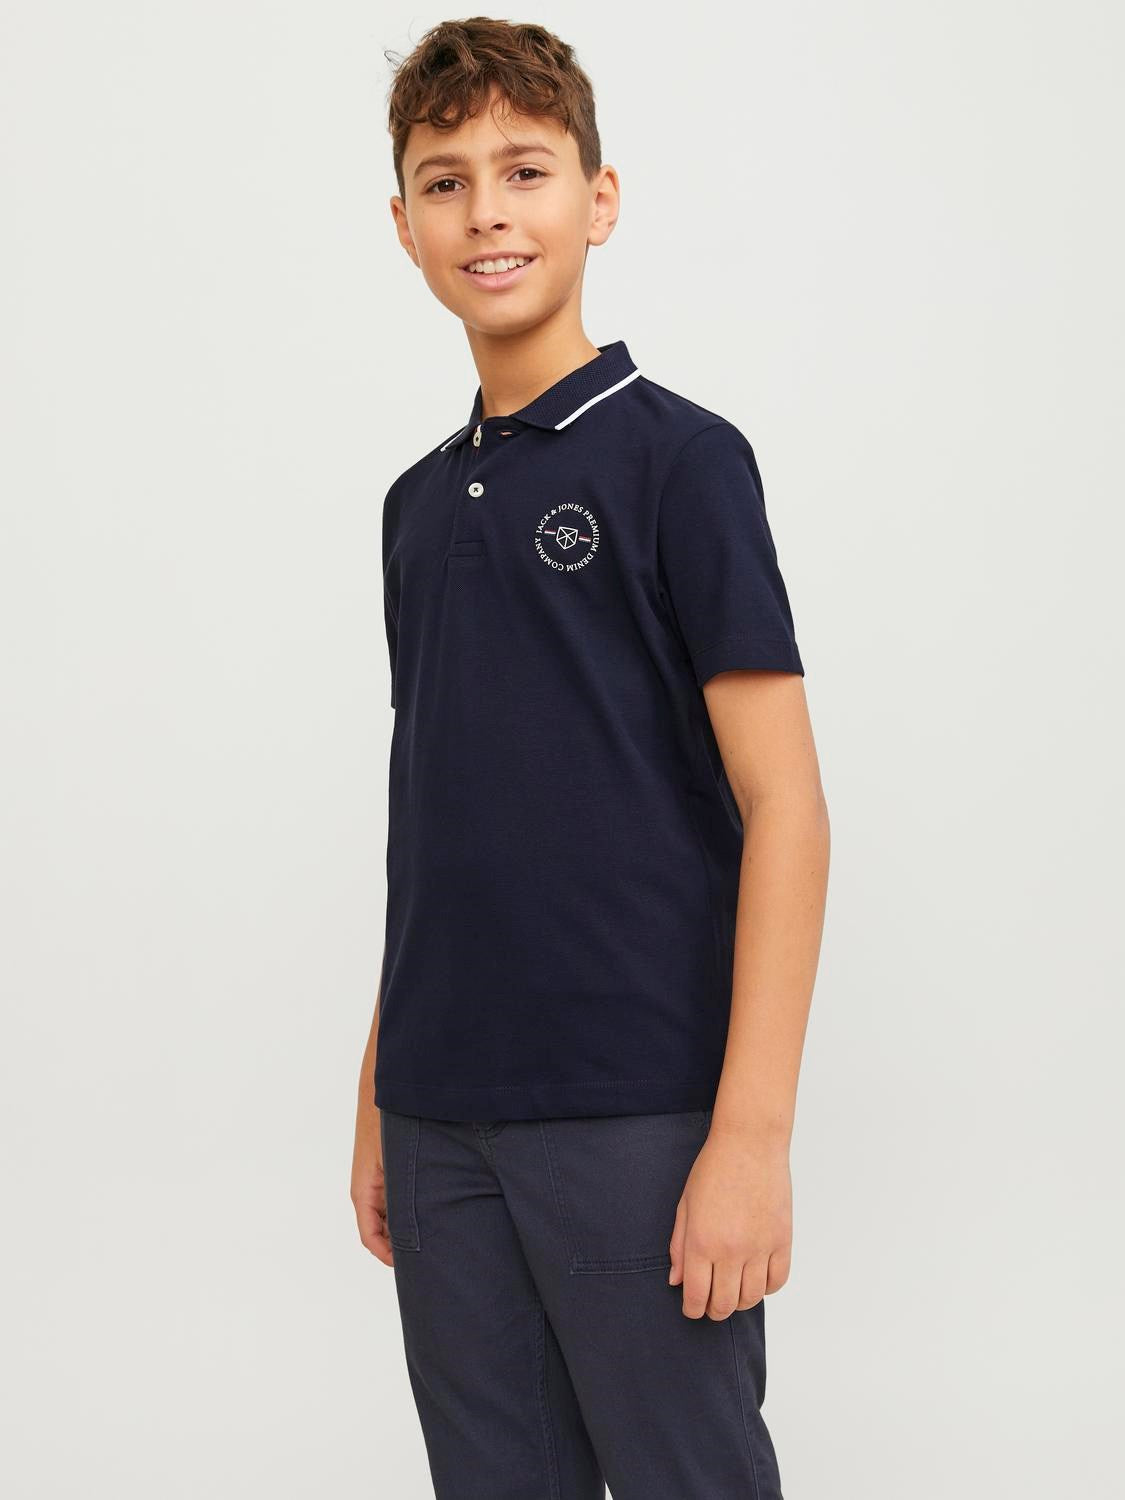 Shield Junior Boy Seabourne Polo Shirt